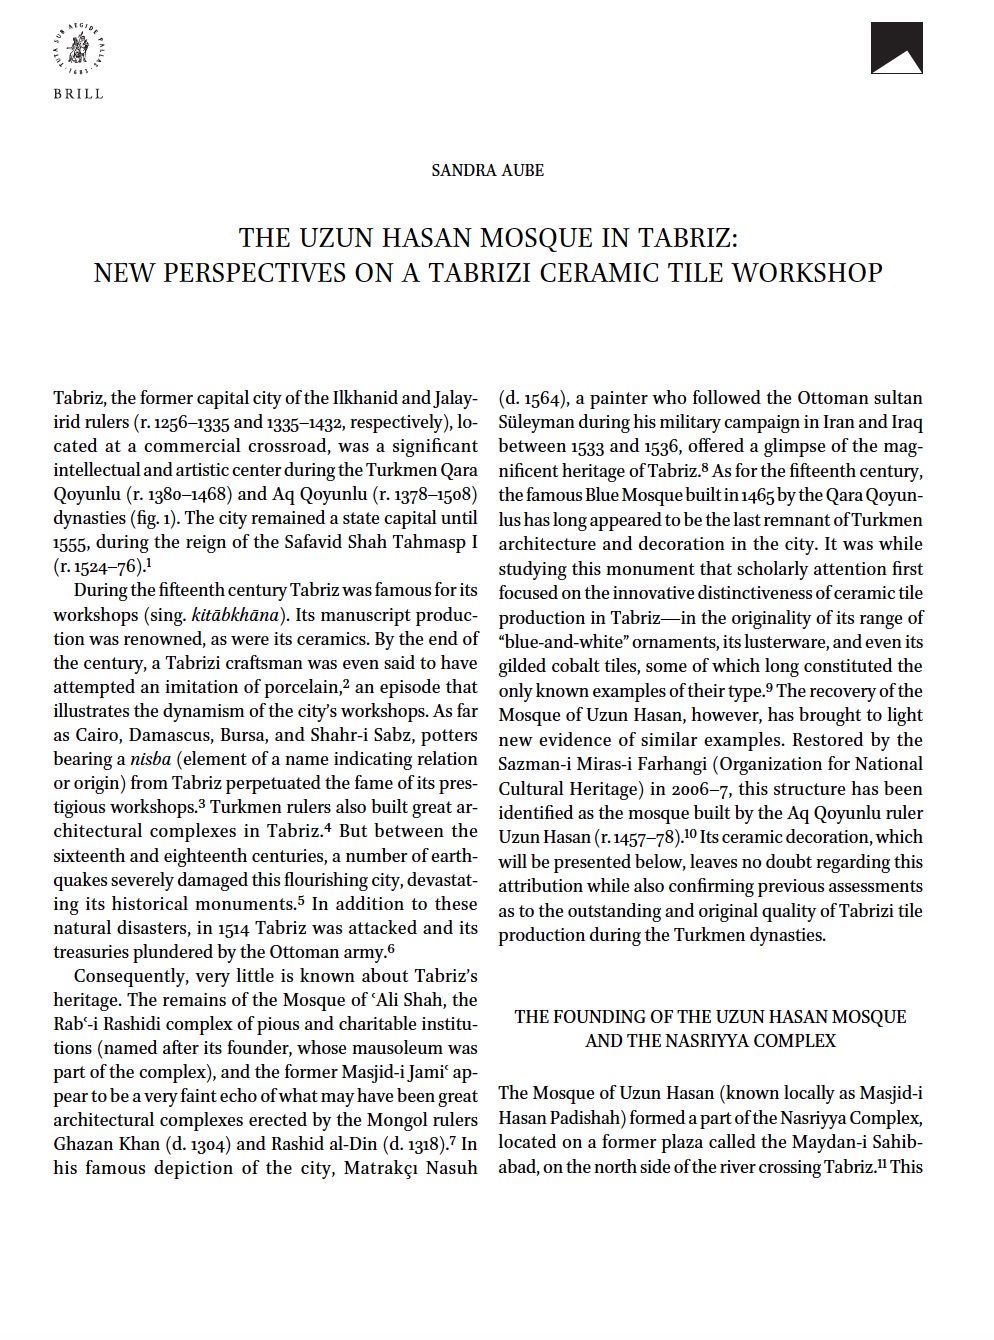 The Uzun Hasan Mosque in Tabriz: New Perspectives on a Tabrizi Ceramic Tile Workshop